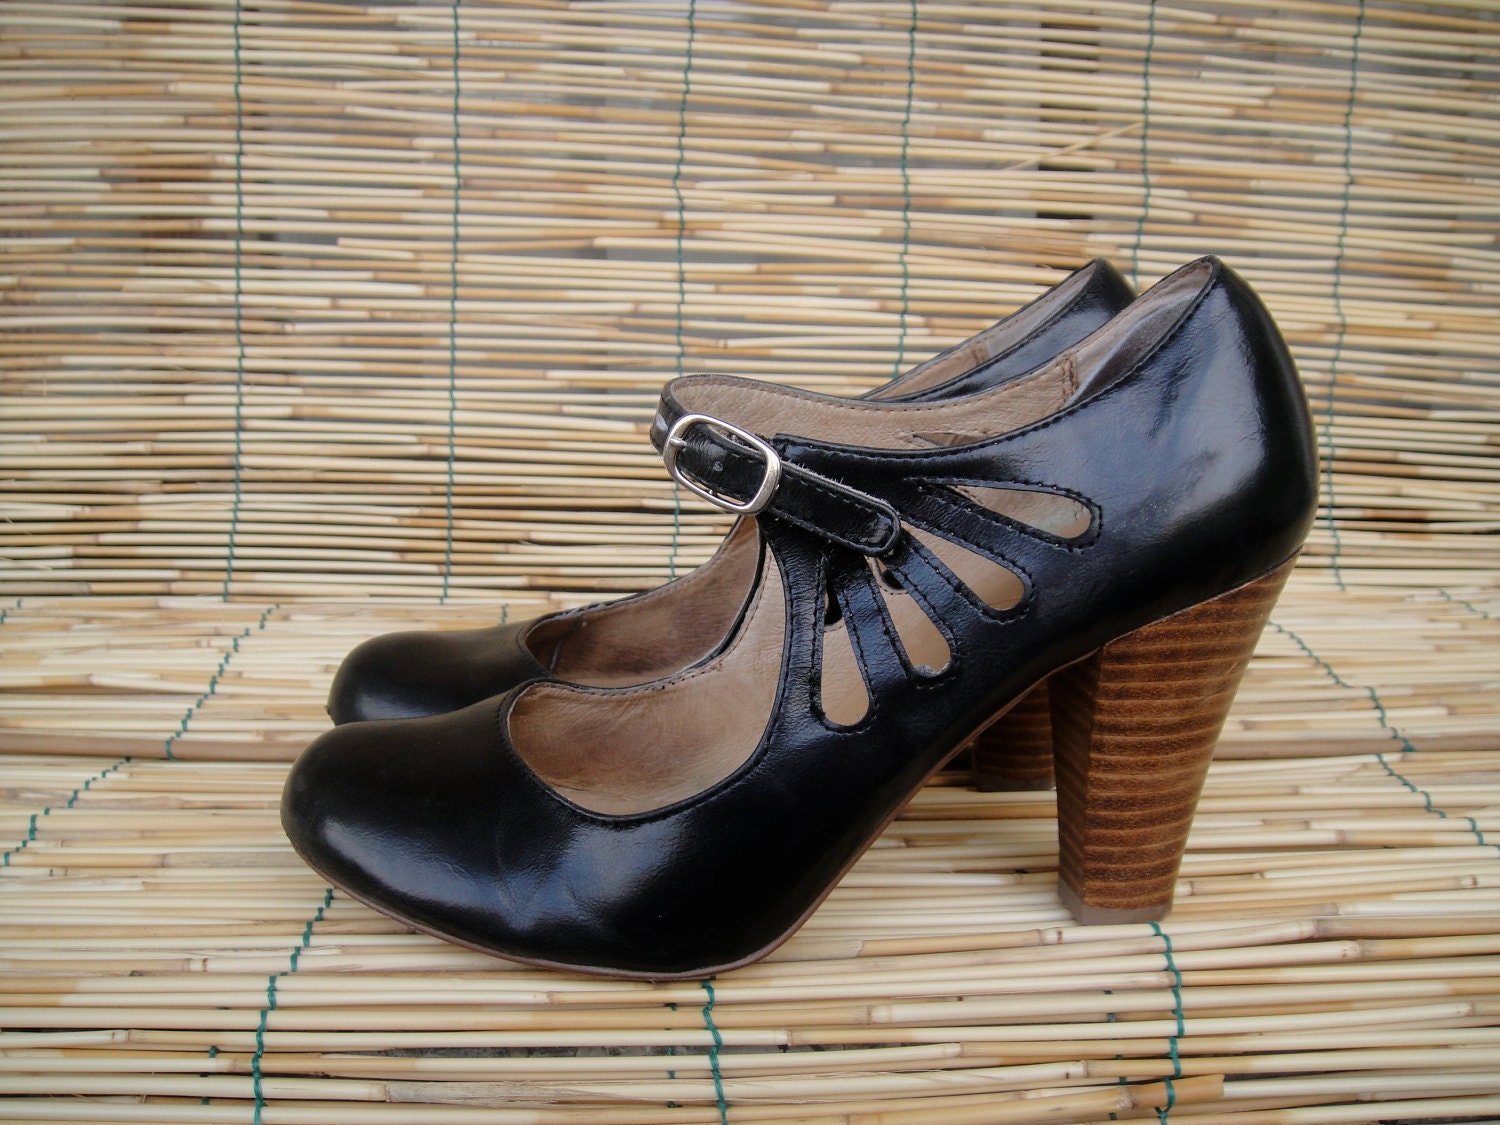 Vintage 1970's Black Leather Strap High Heels Shoes Size